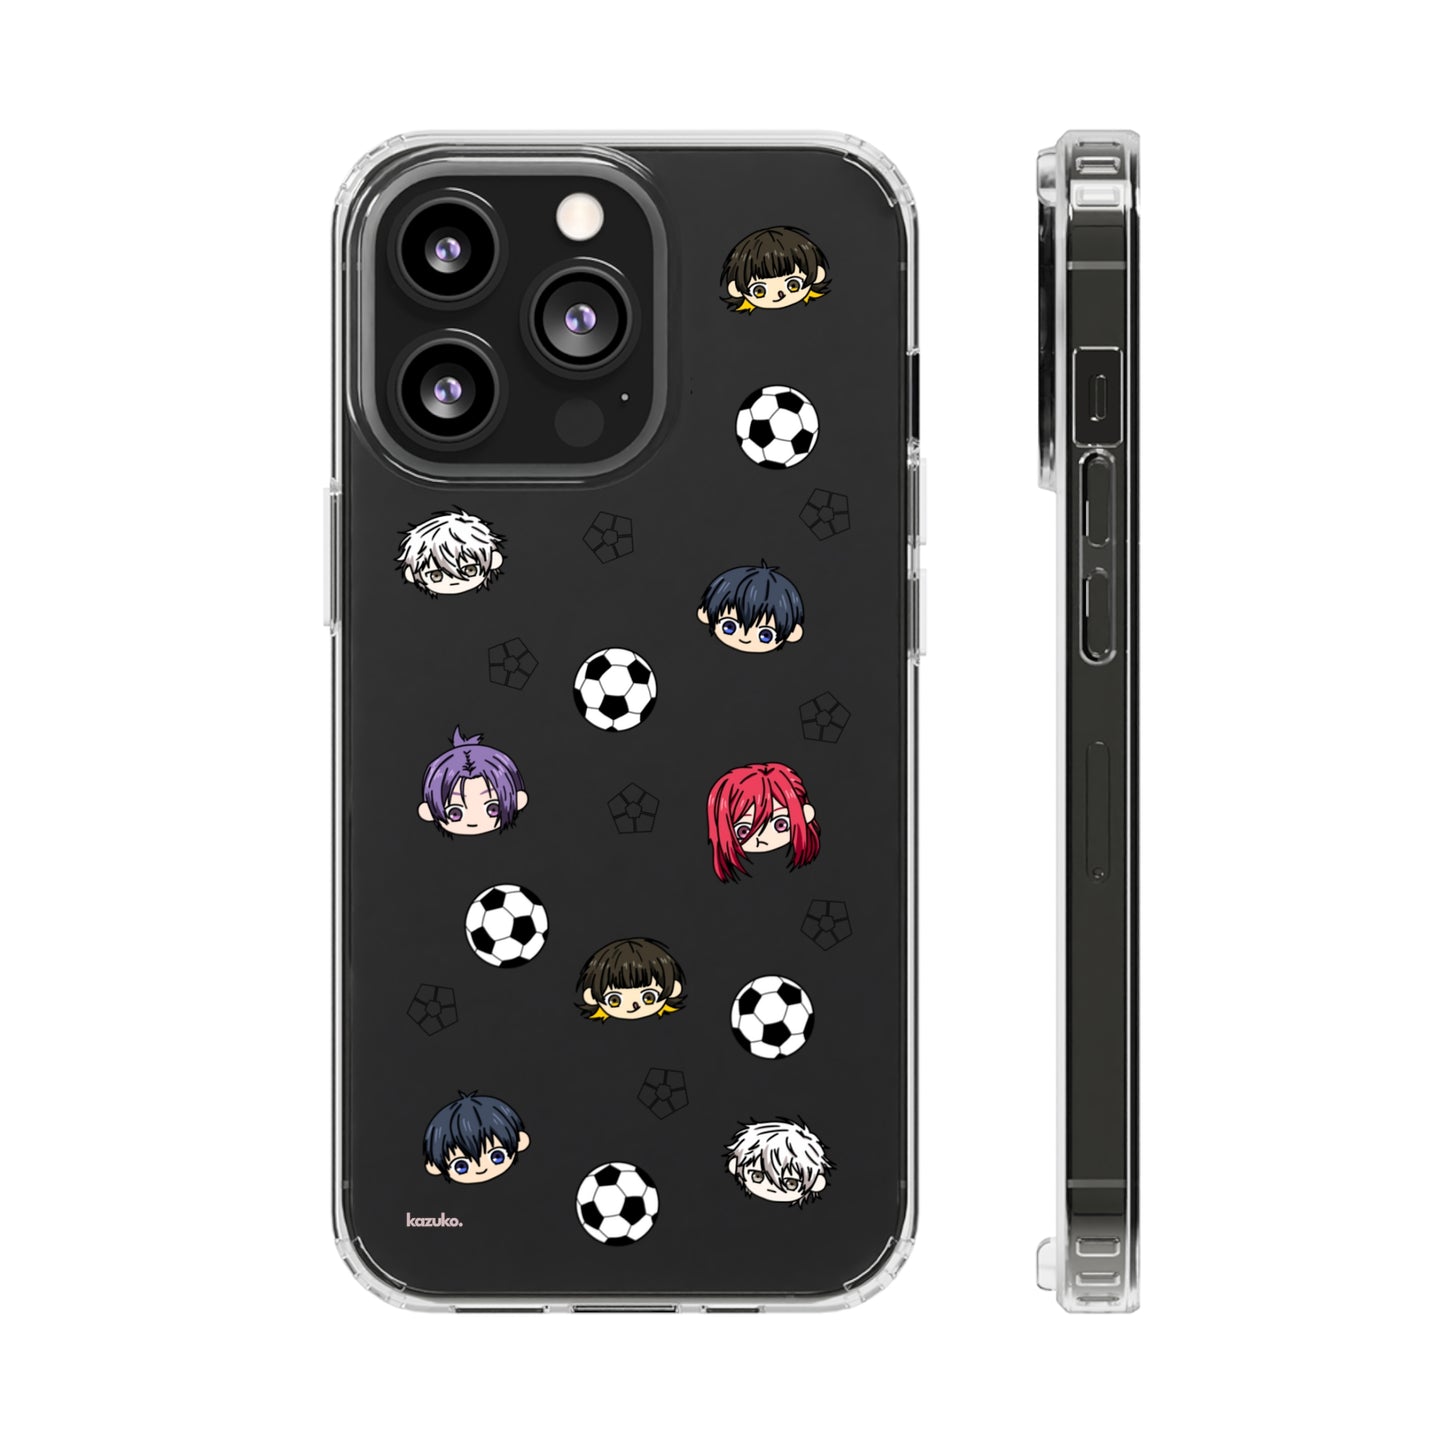 Soccer Anime Chibi Phone Case